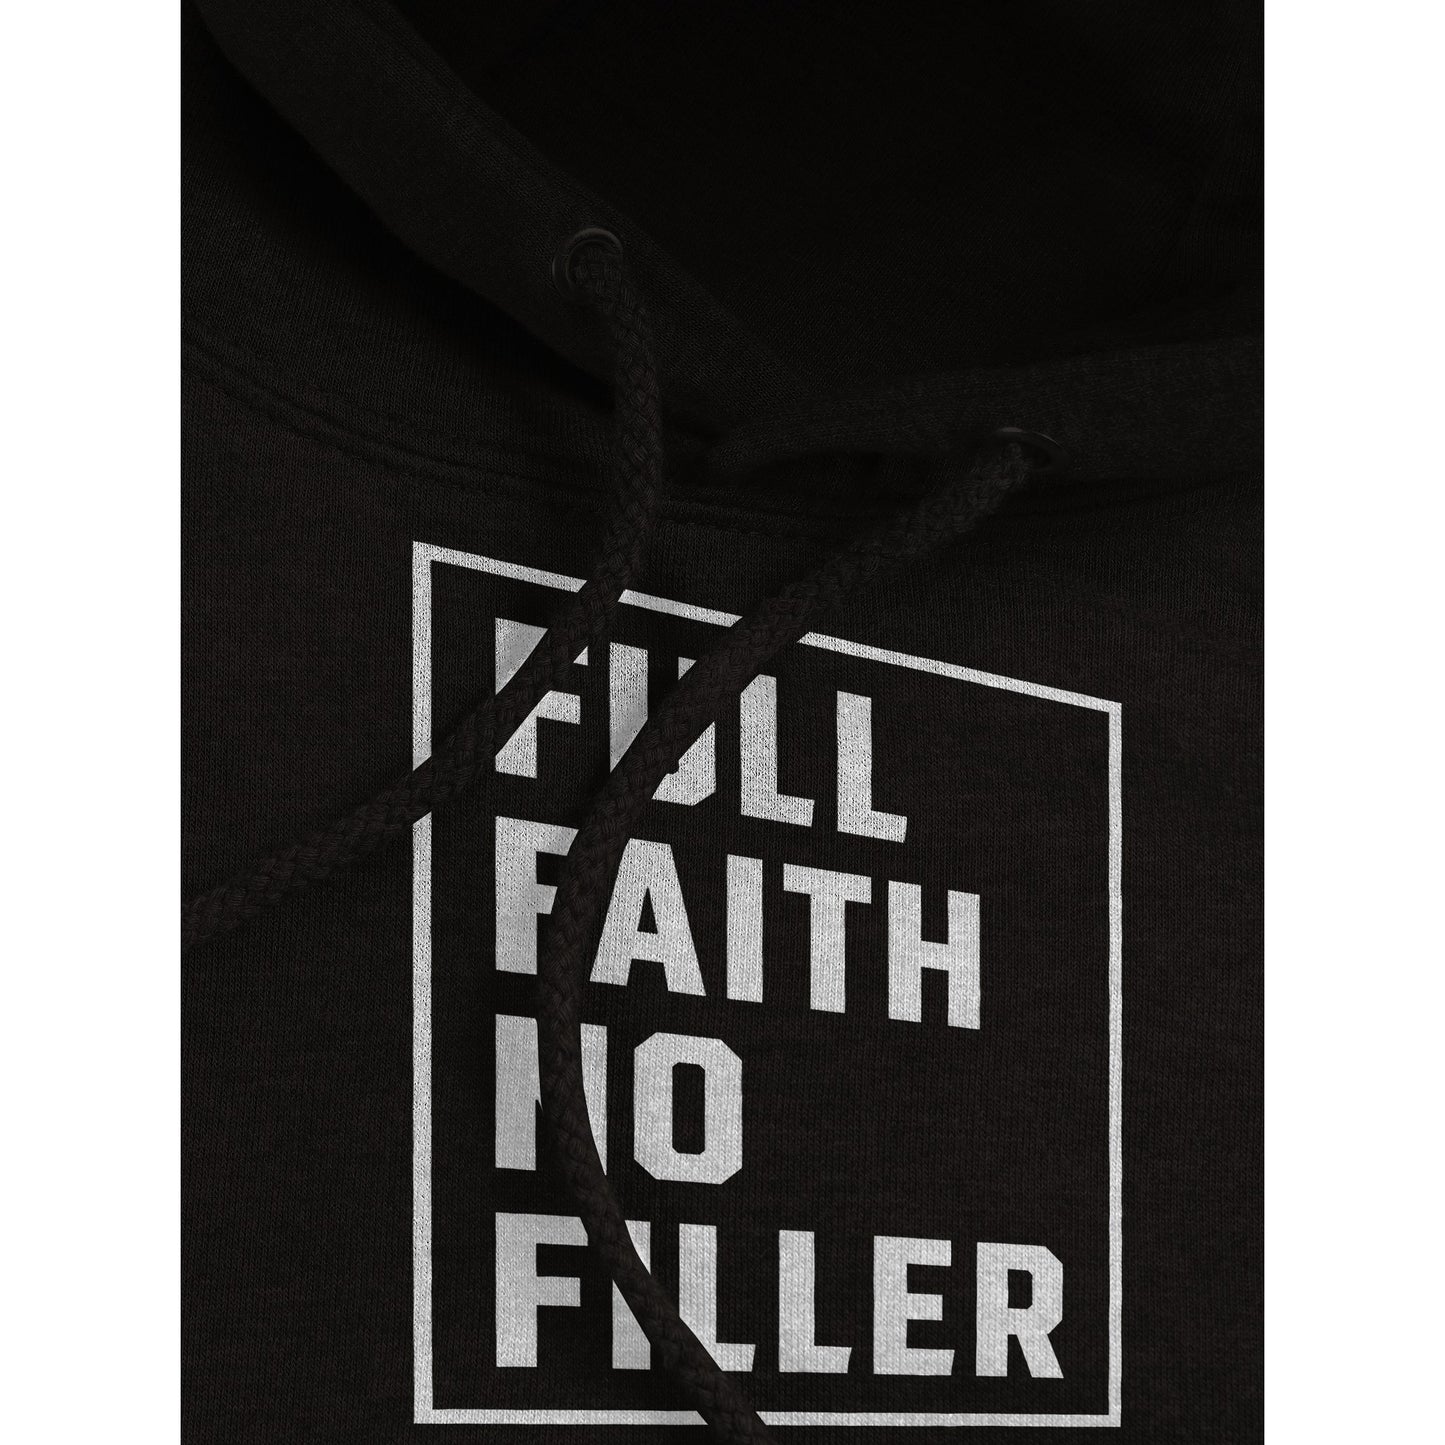 "Full Faith No Filler" Premium Christian Pullover Hoodie